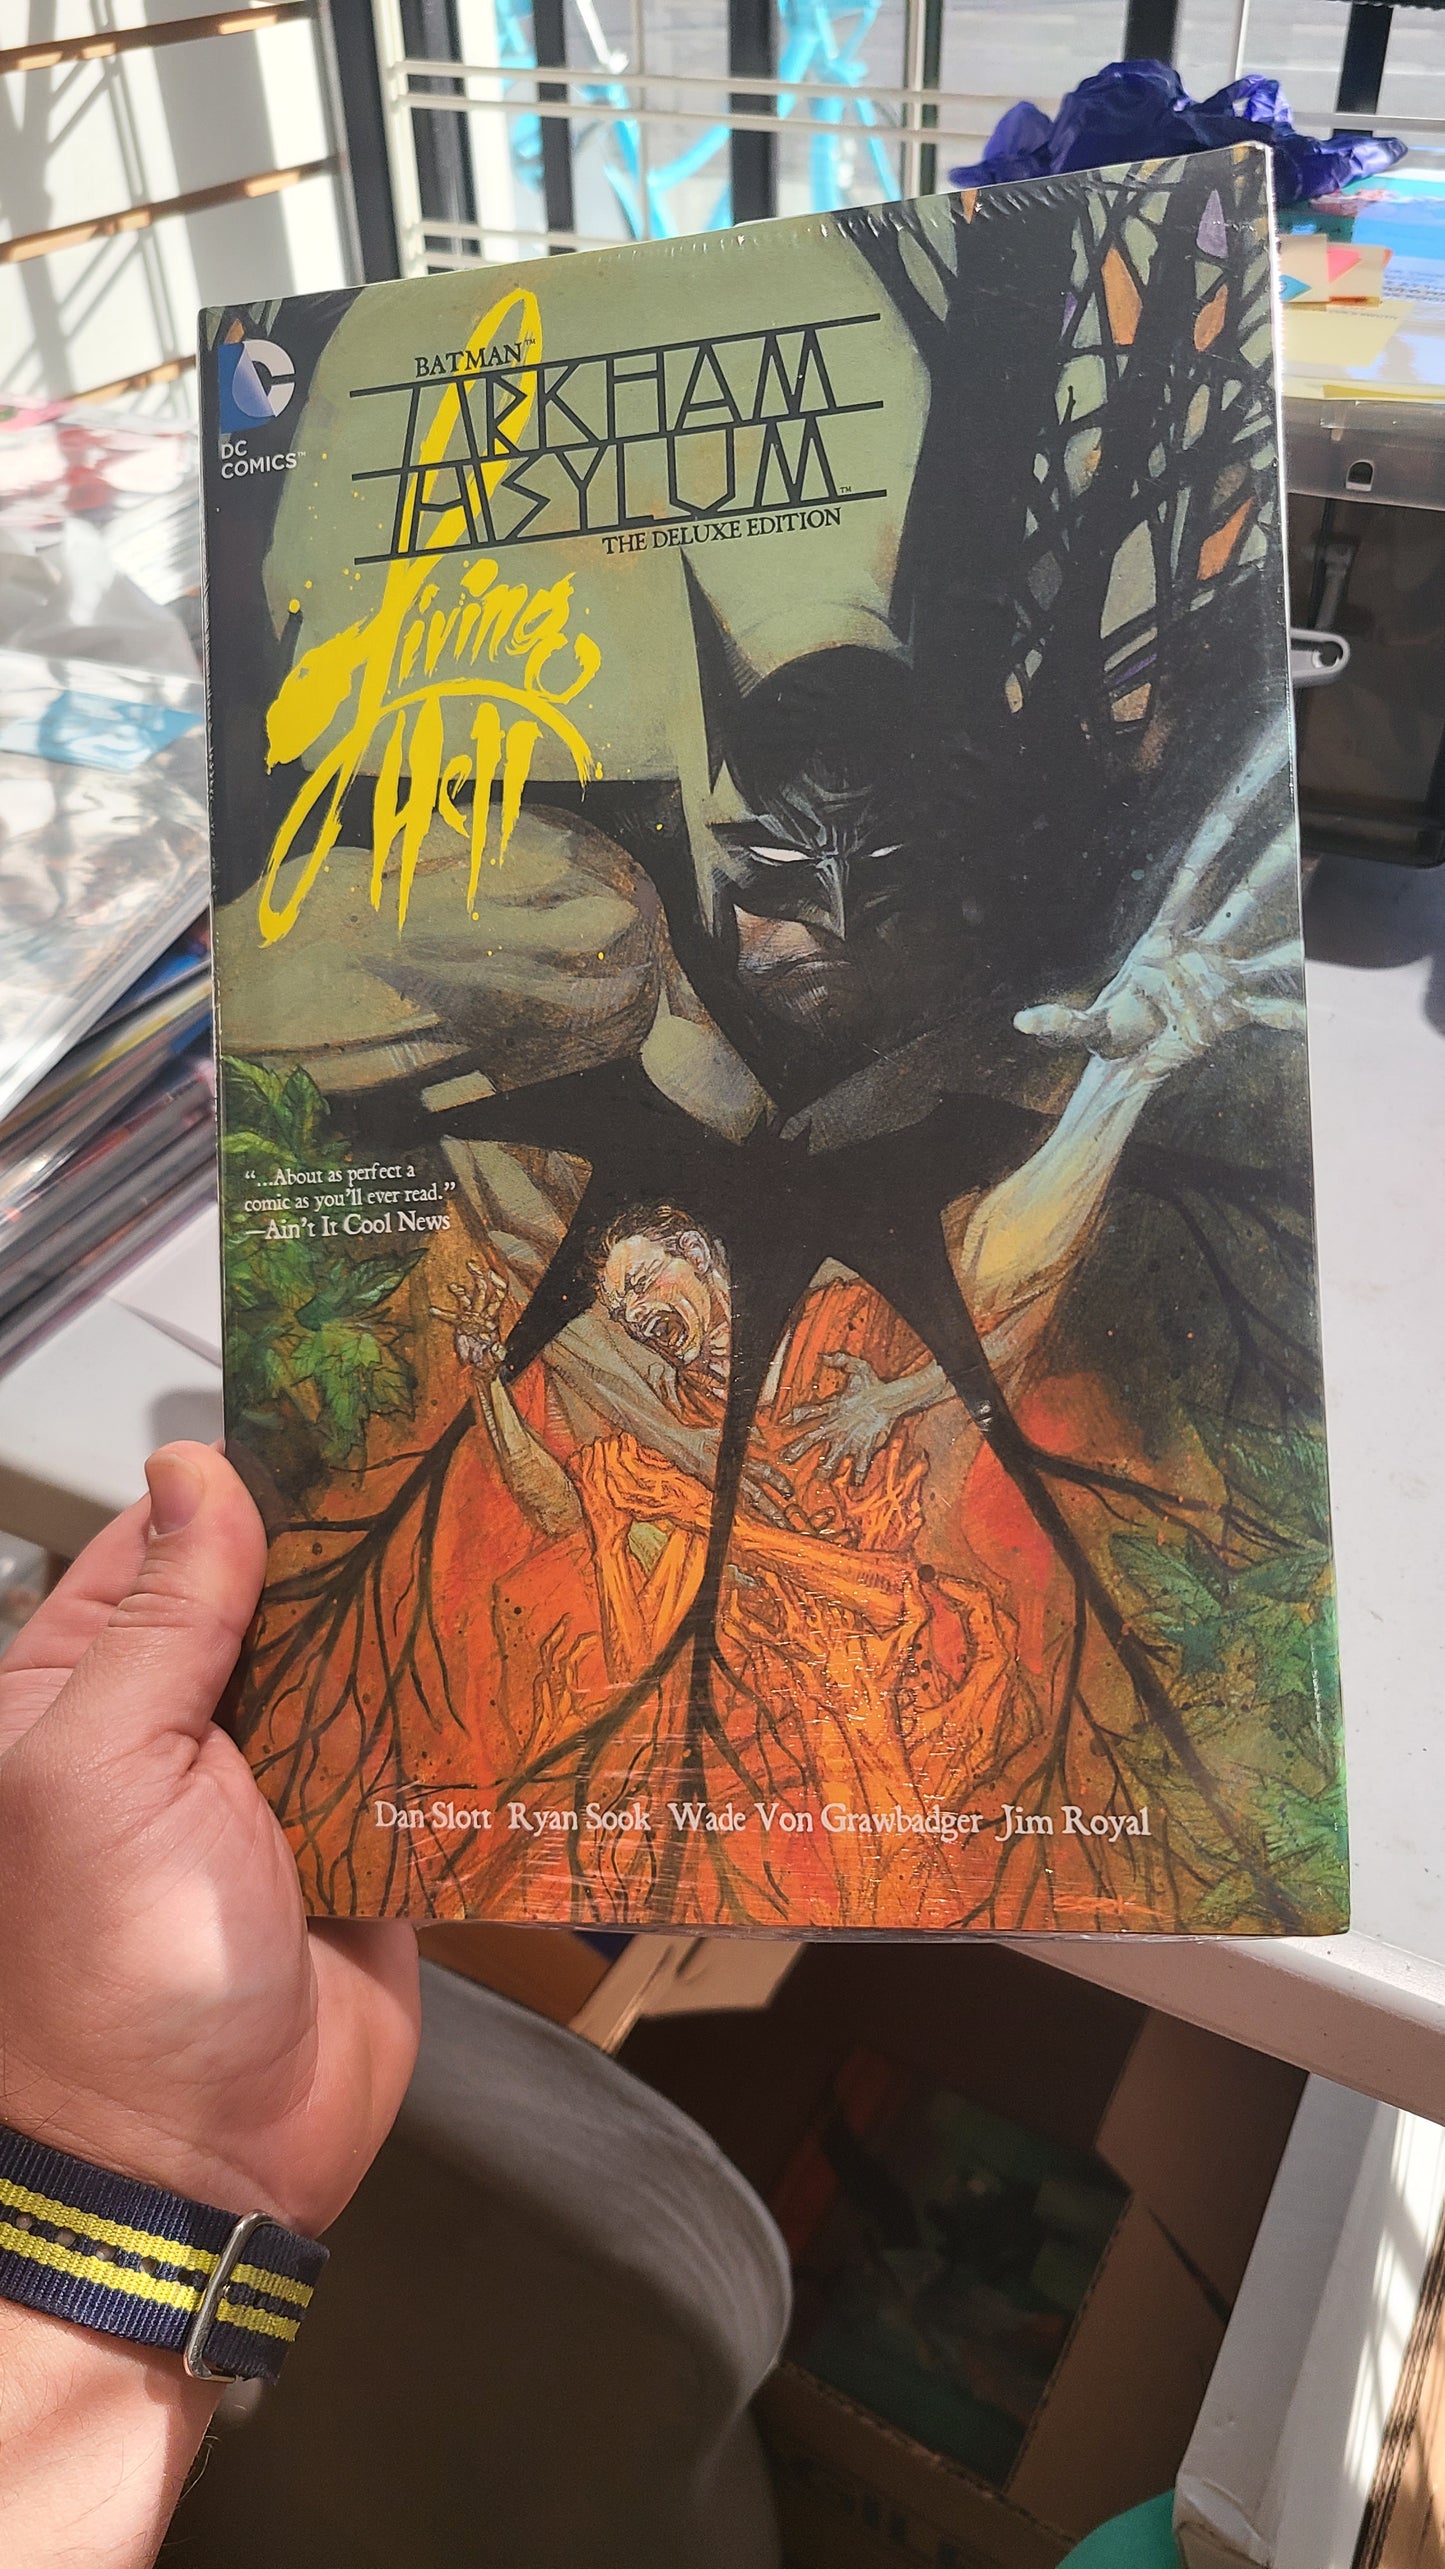 Batman Arkham Asylum living Hell Deluxe Edition Hardcover